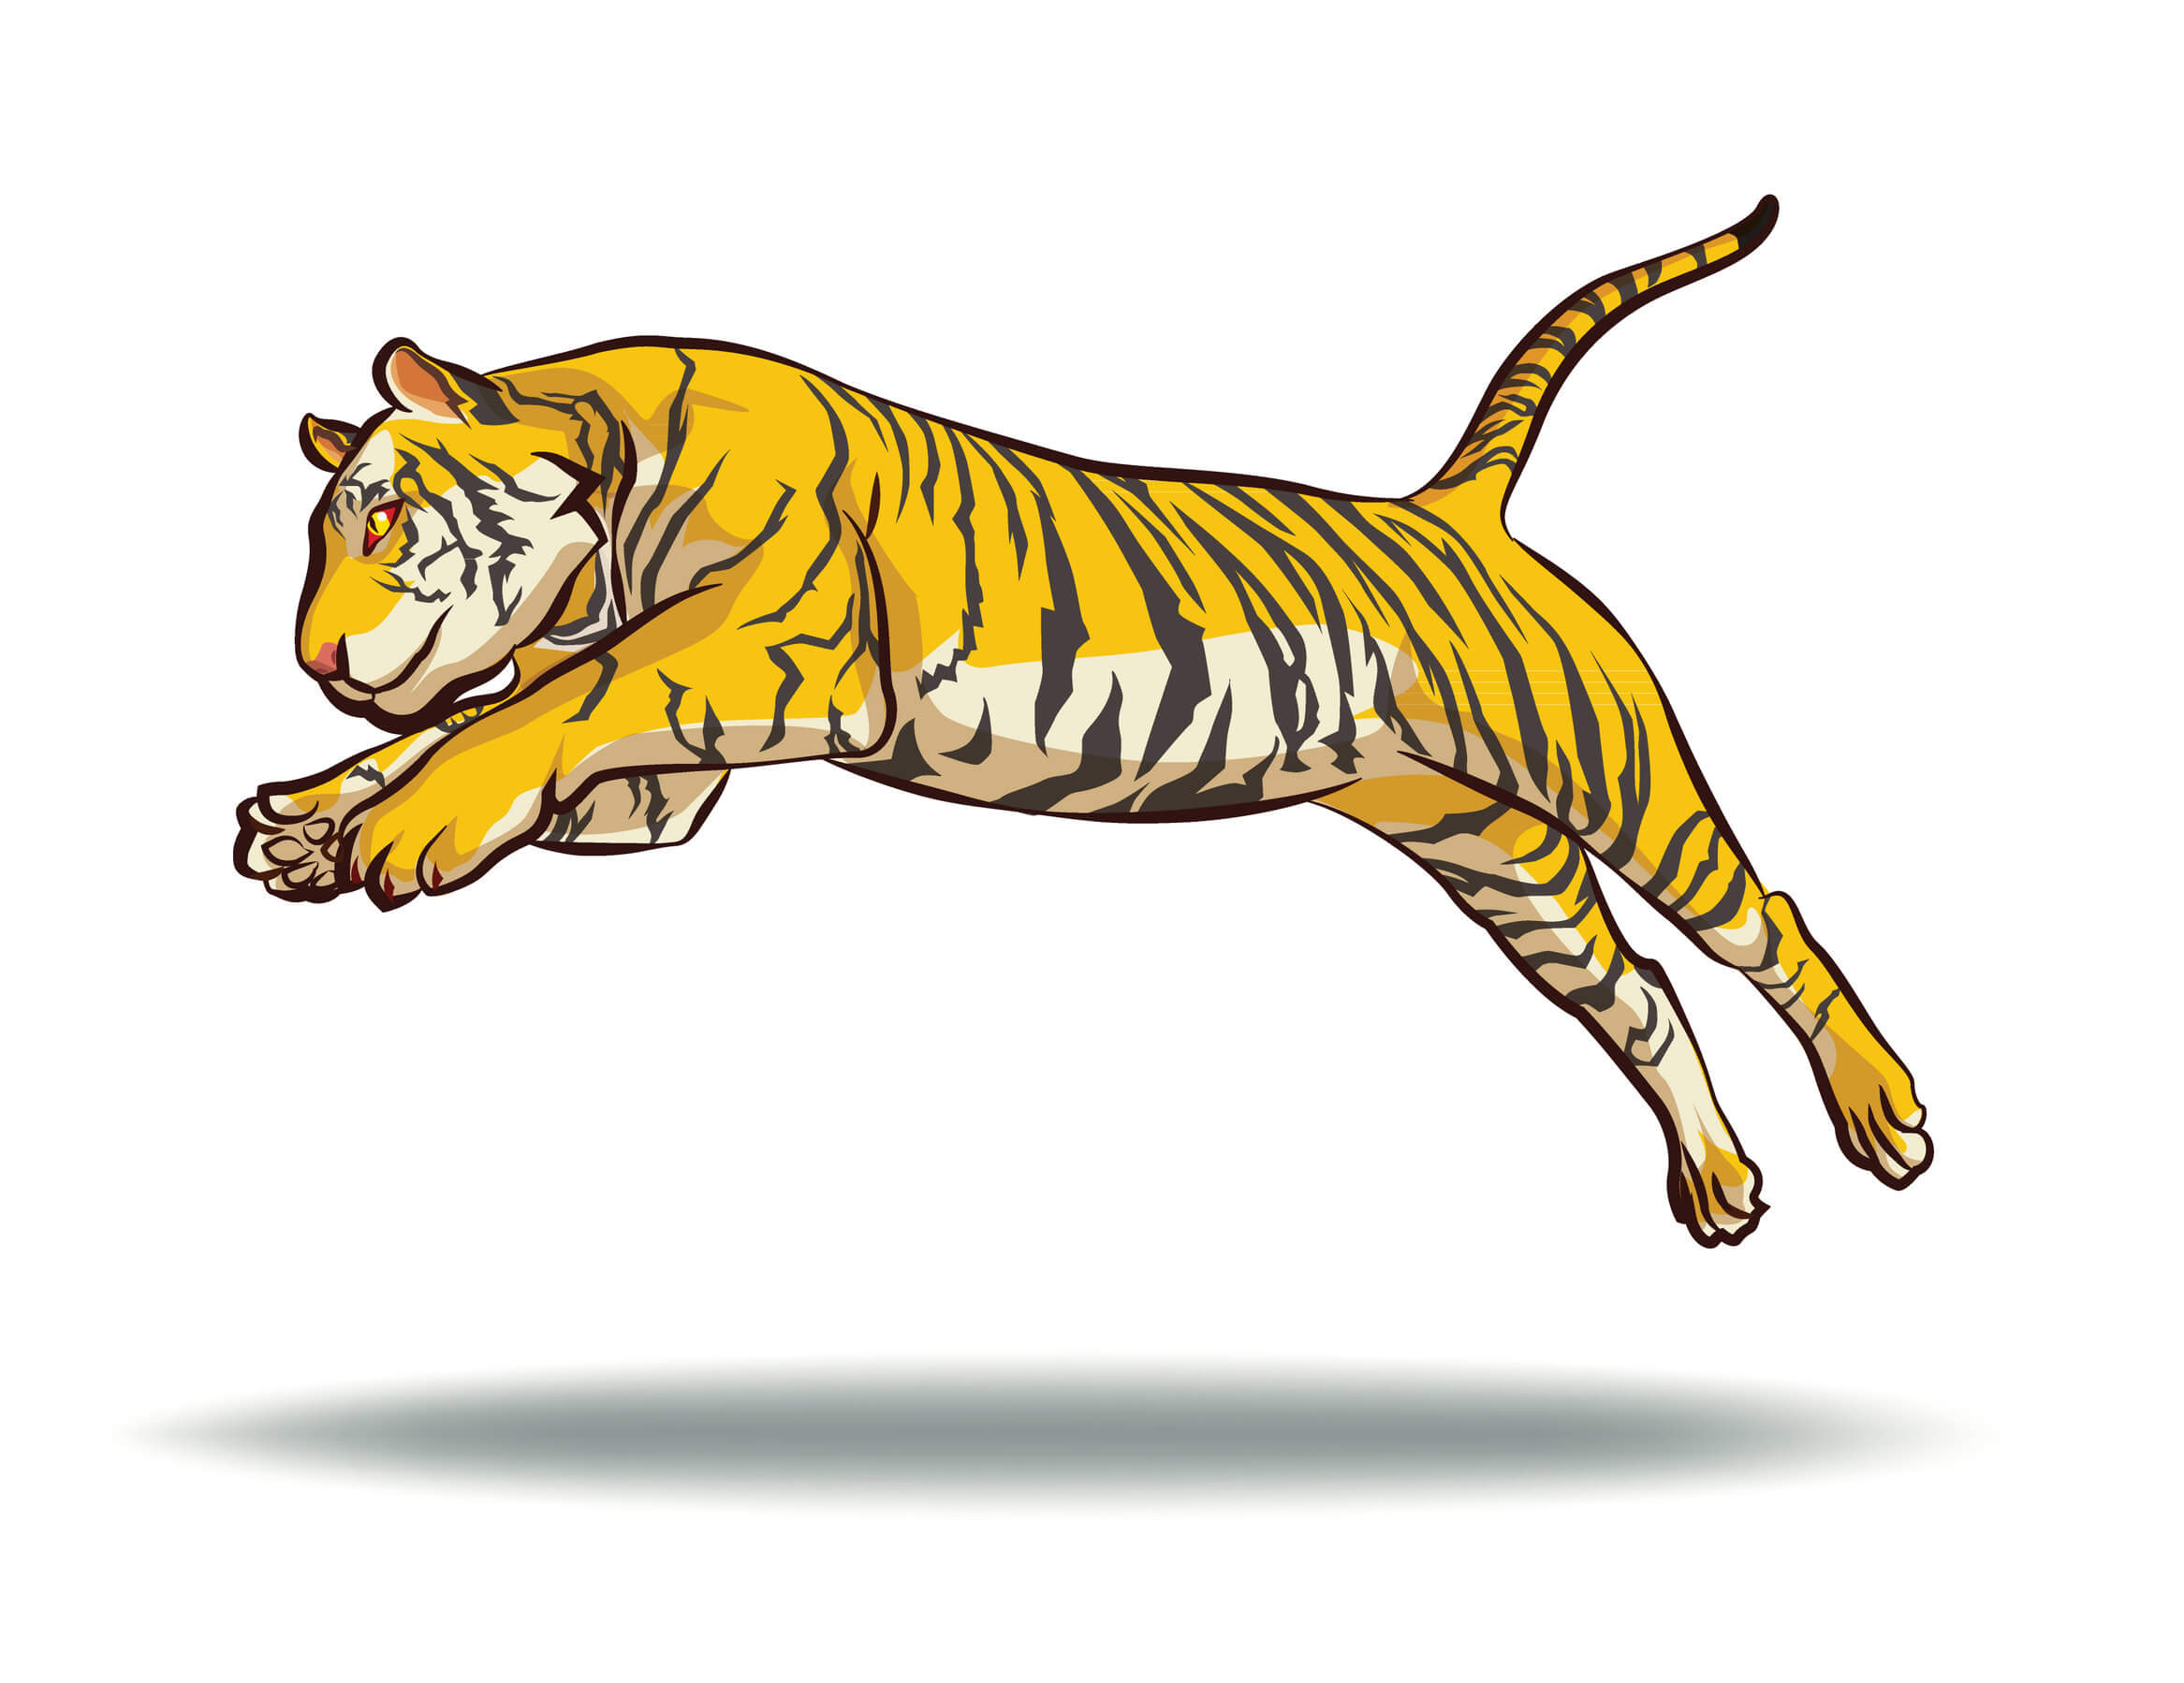 La imagen del tigre.